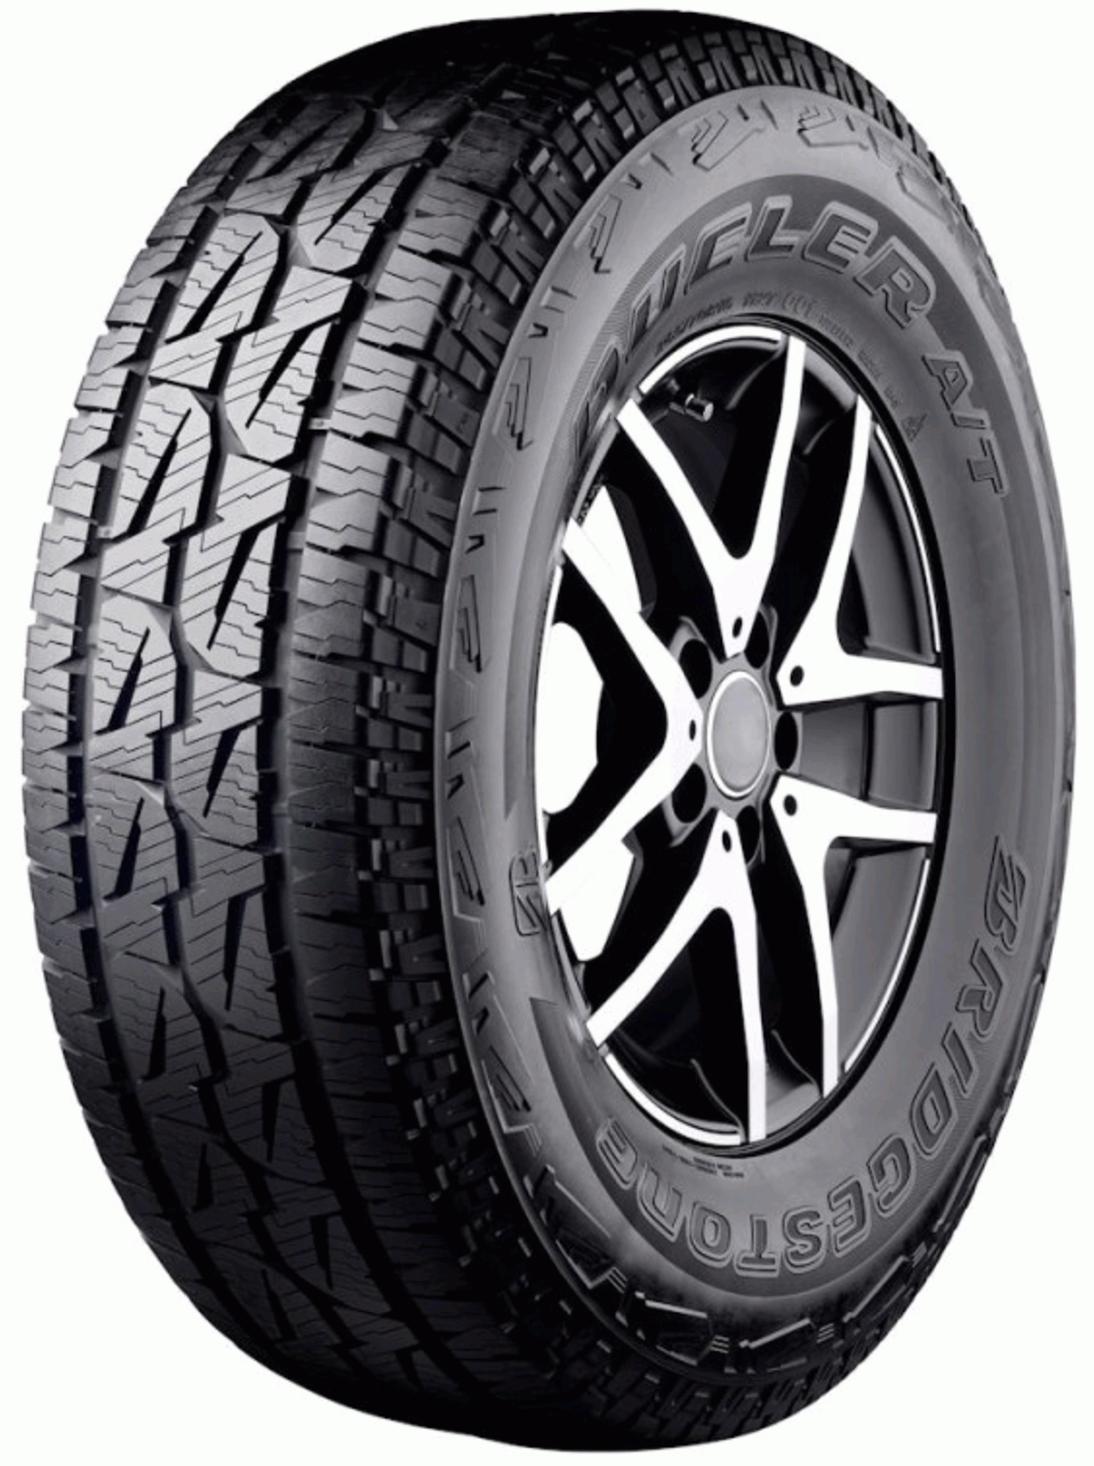 Bridgestone Dueler AT 001 - Tire Reviews and Tests | Autoreifen